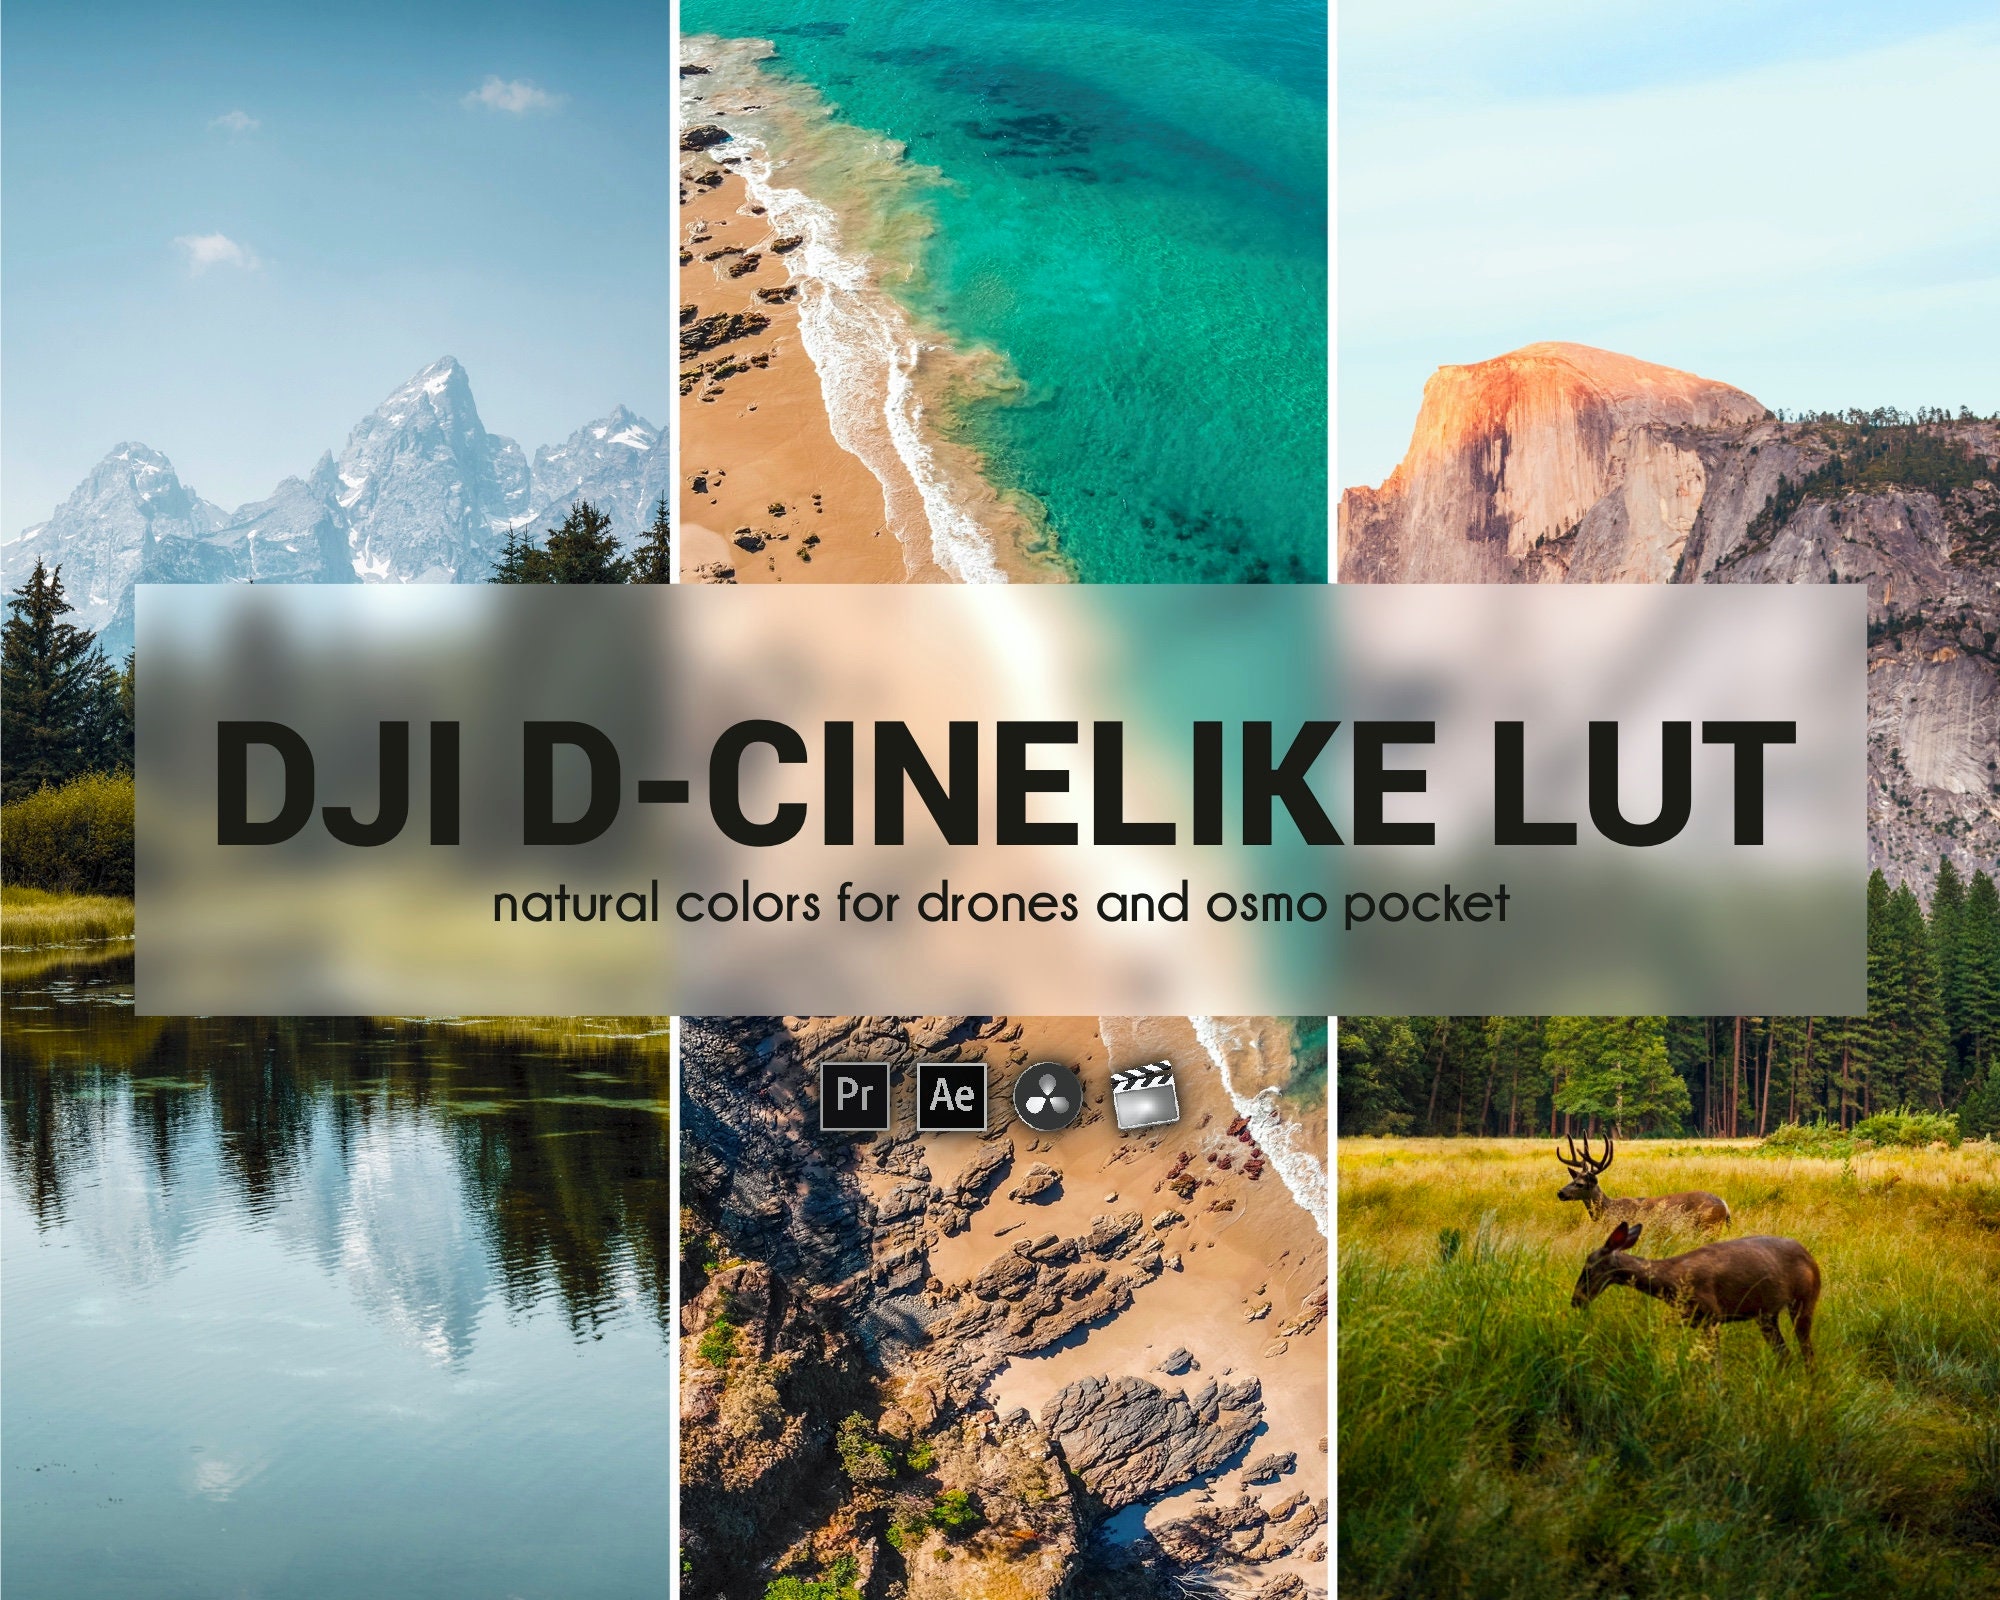 Enhance Your DJI Pocket 3 - Action 4 Footage - Cinematic LUT Pack